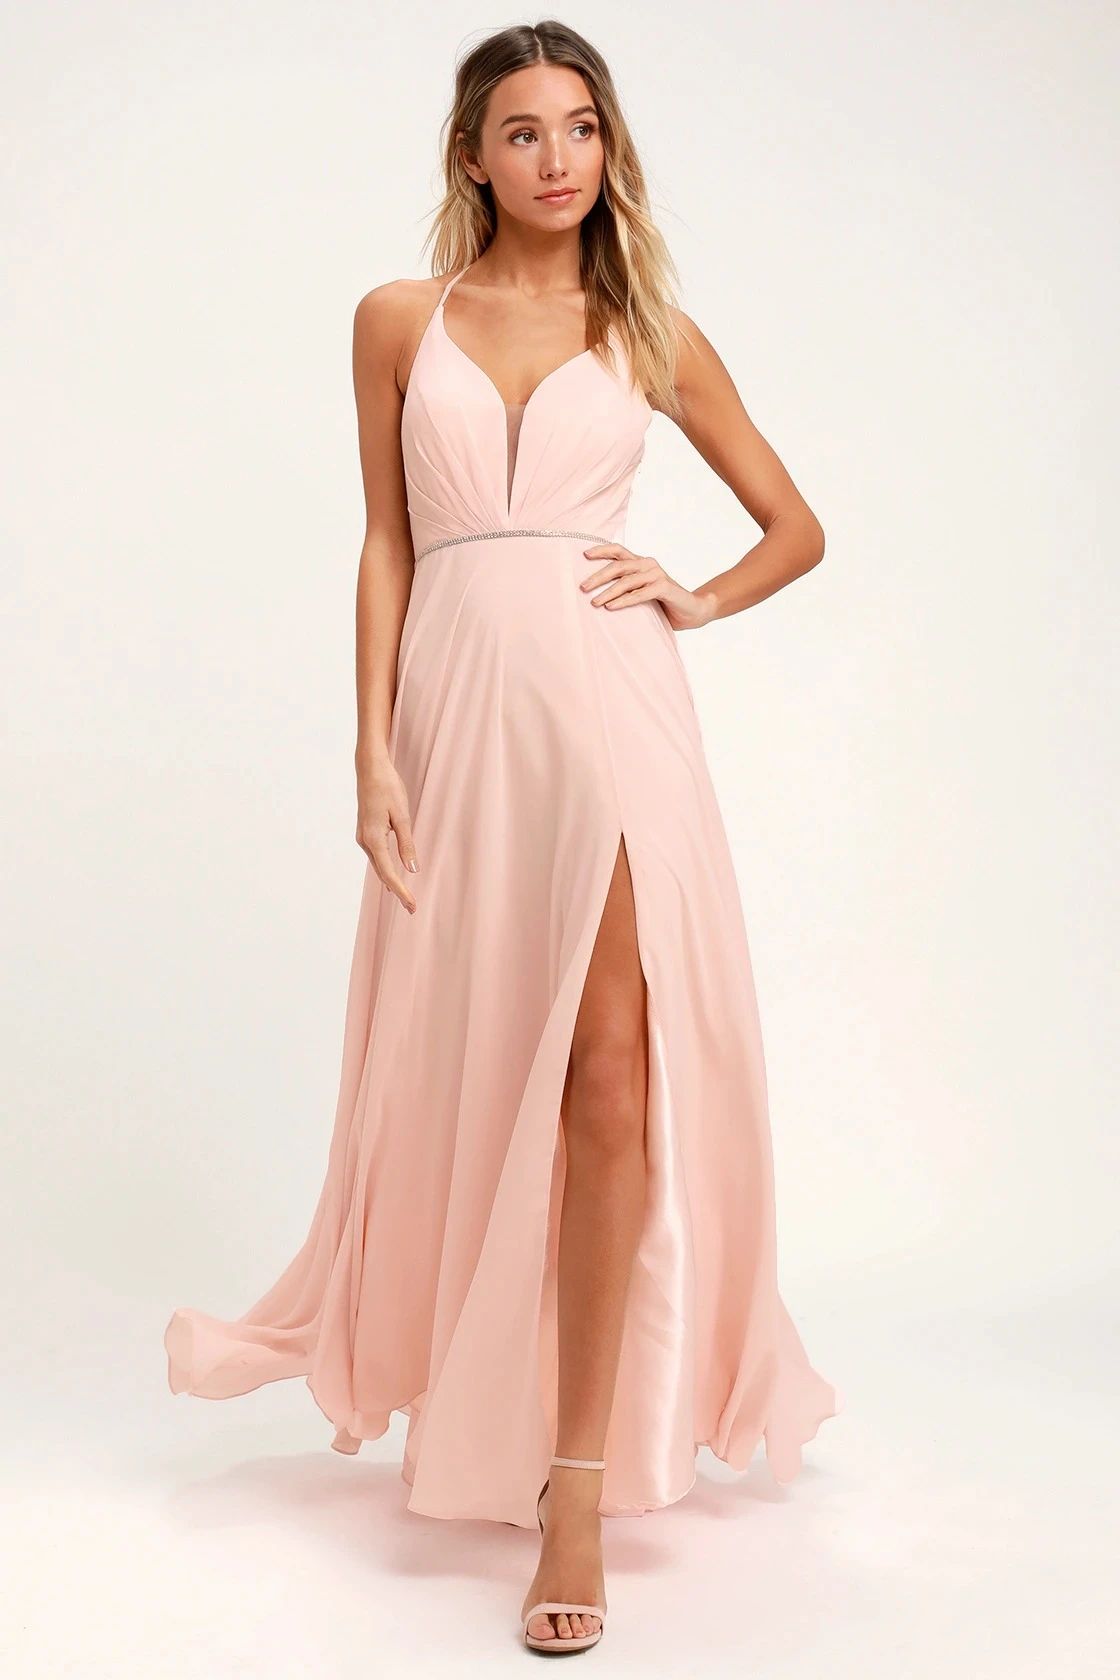 She's Gorgeous Blush Pink Lace-Up Rhinestone Maxi Dress | Lulus (US)